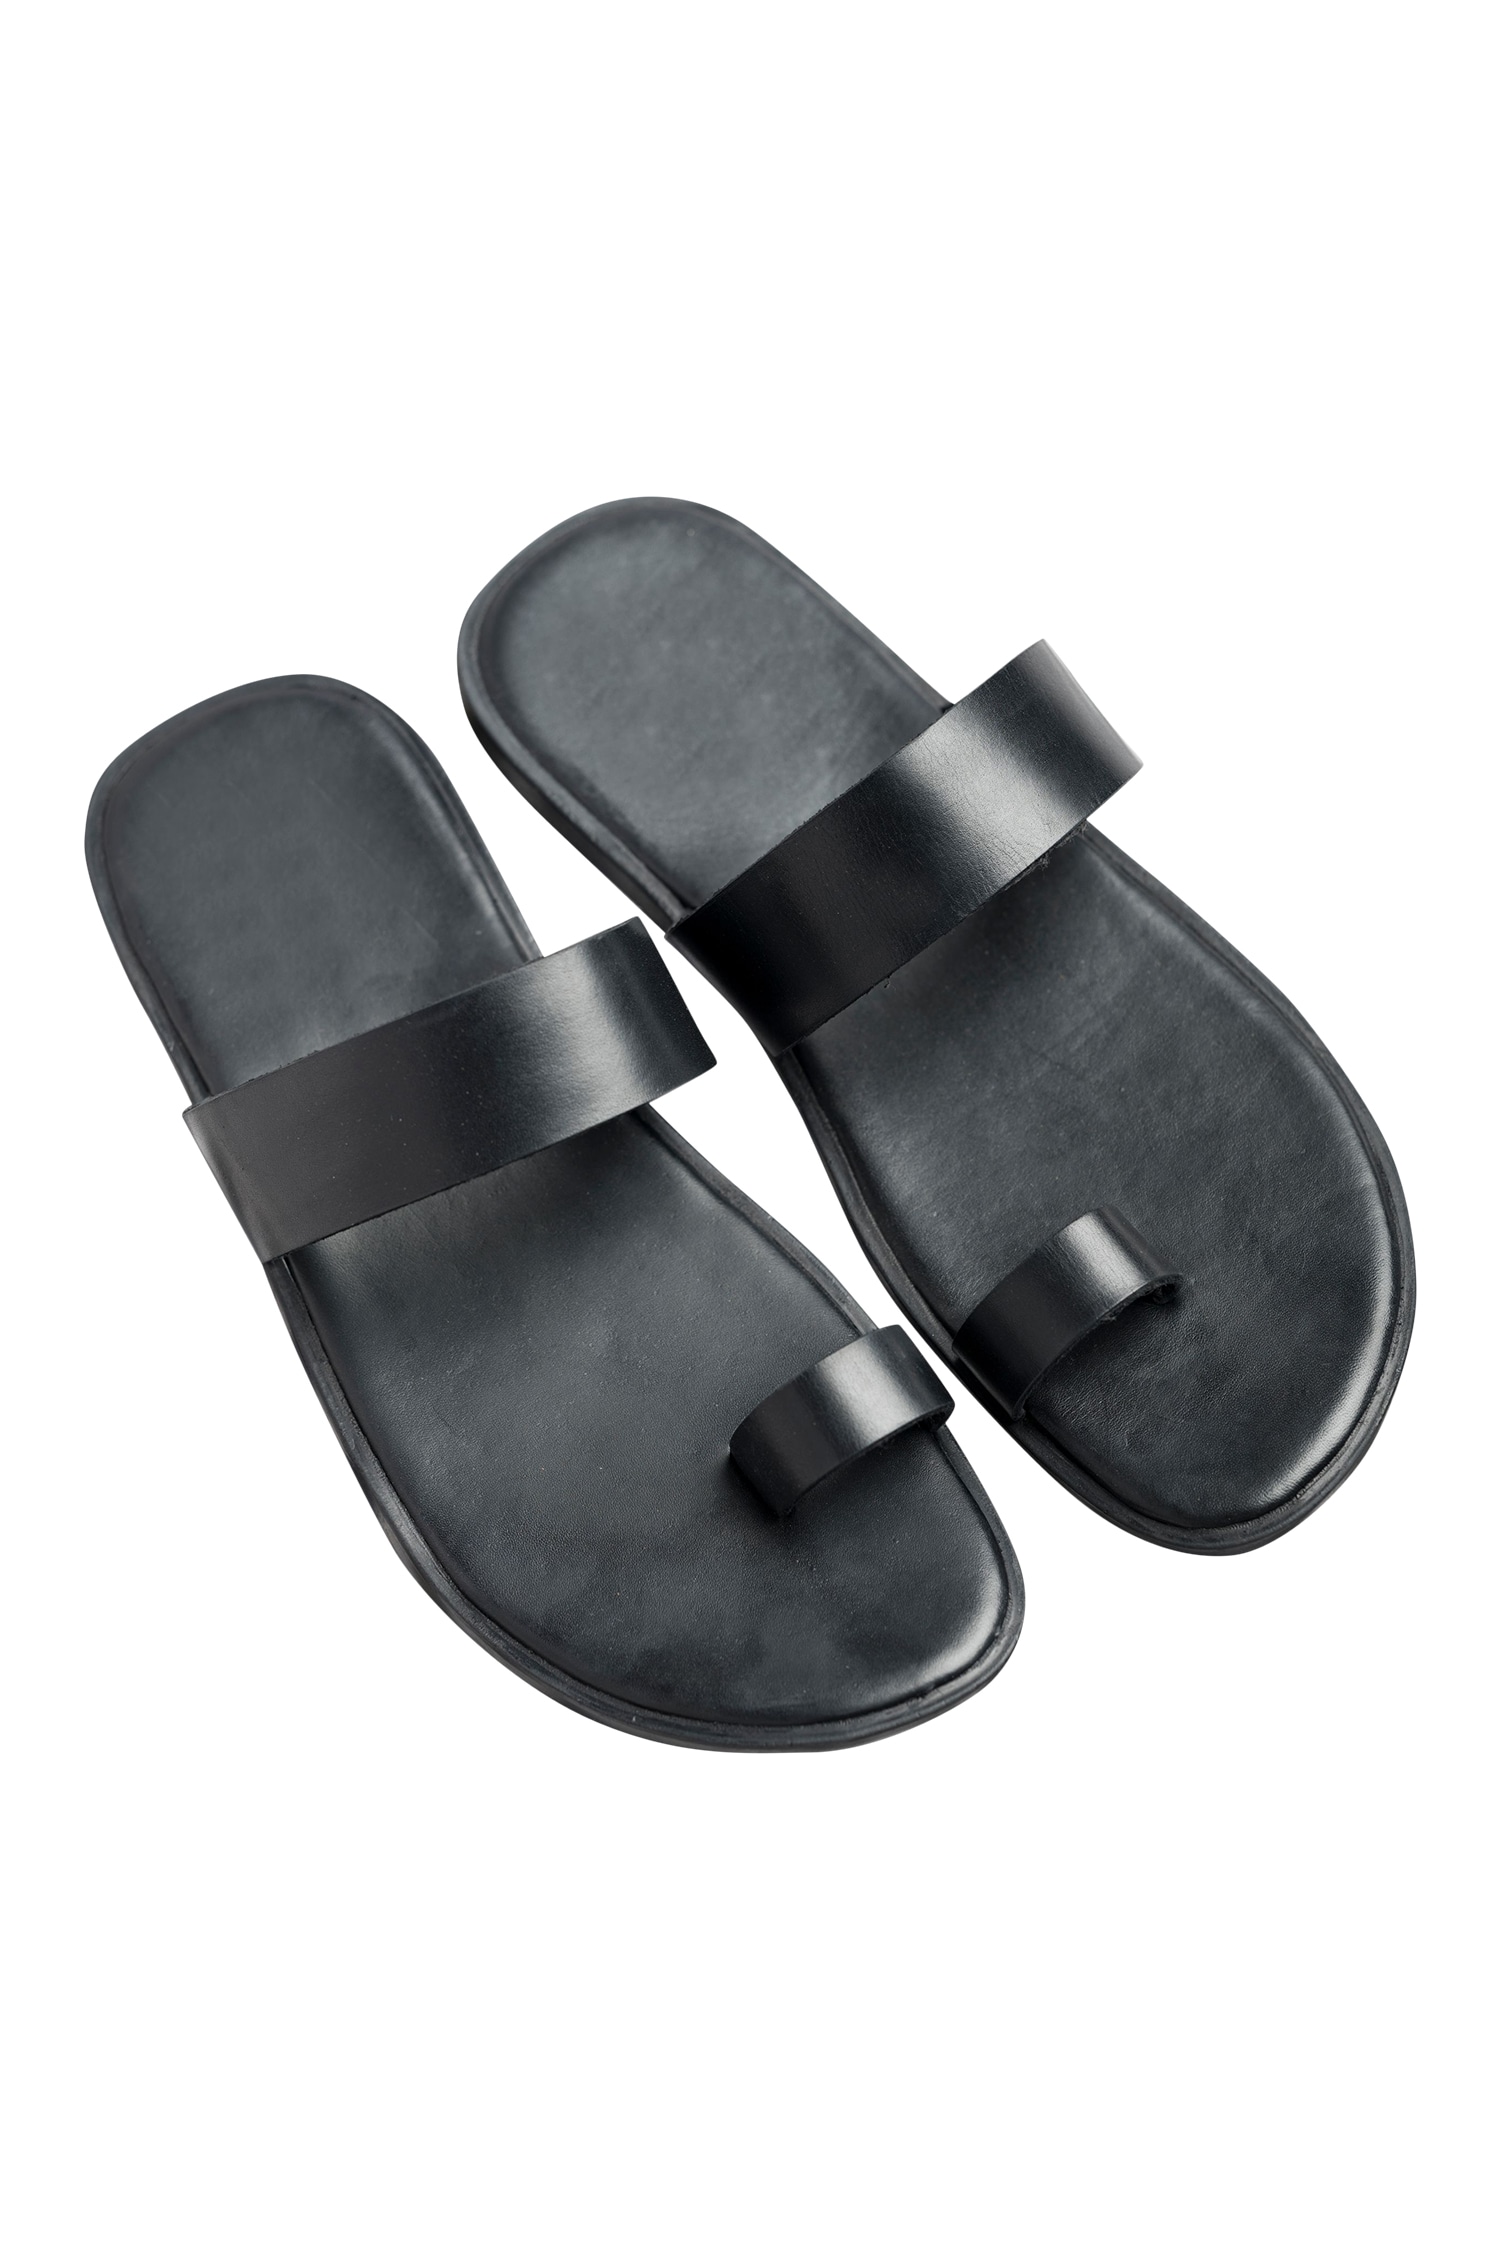 Dmodot Black Strap Sandals